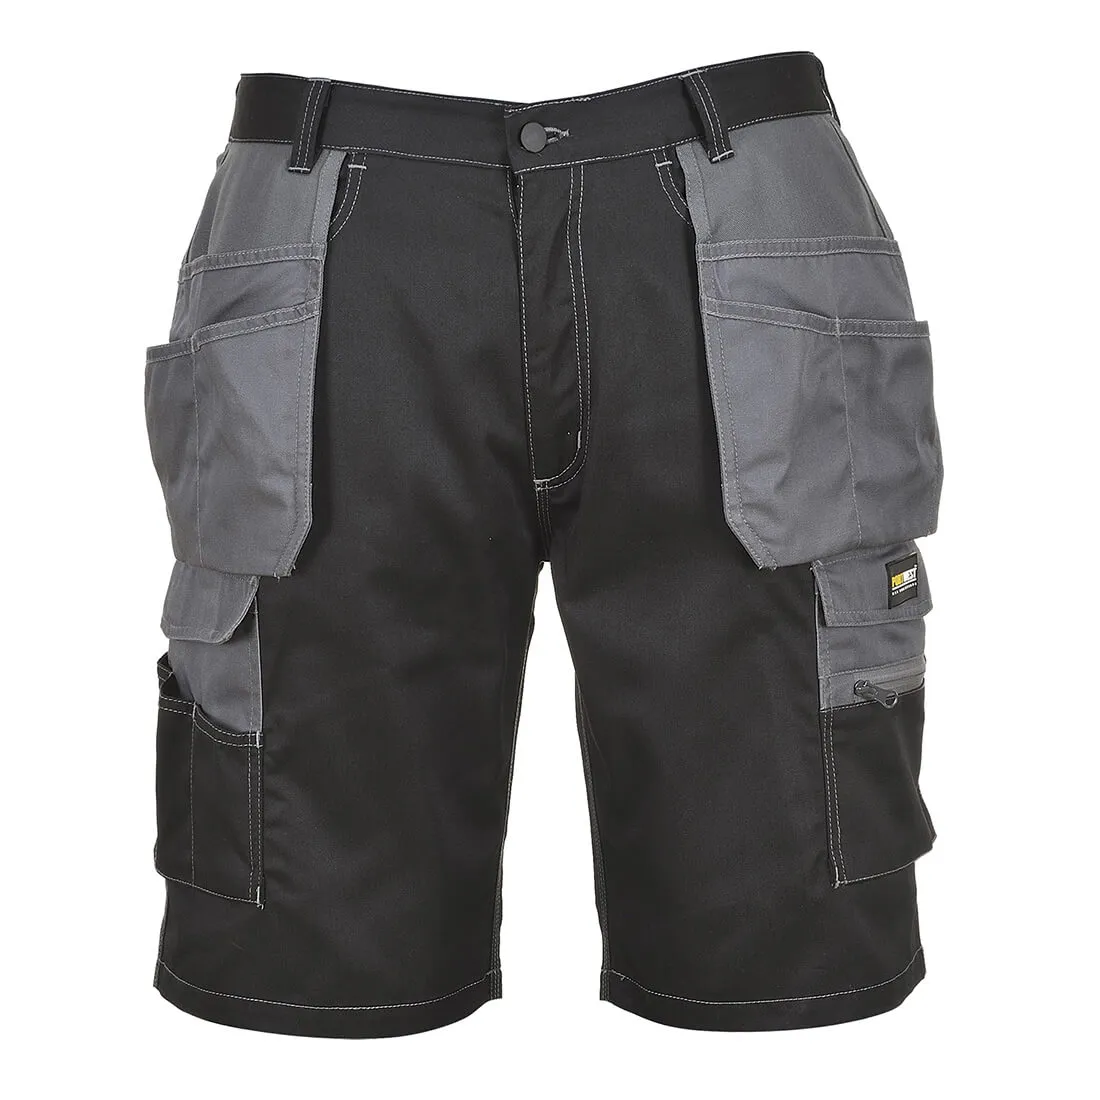 Portwest KS18 Granite Holster Shorts - Black / Grey, S